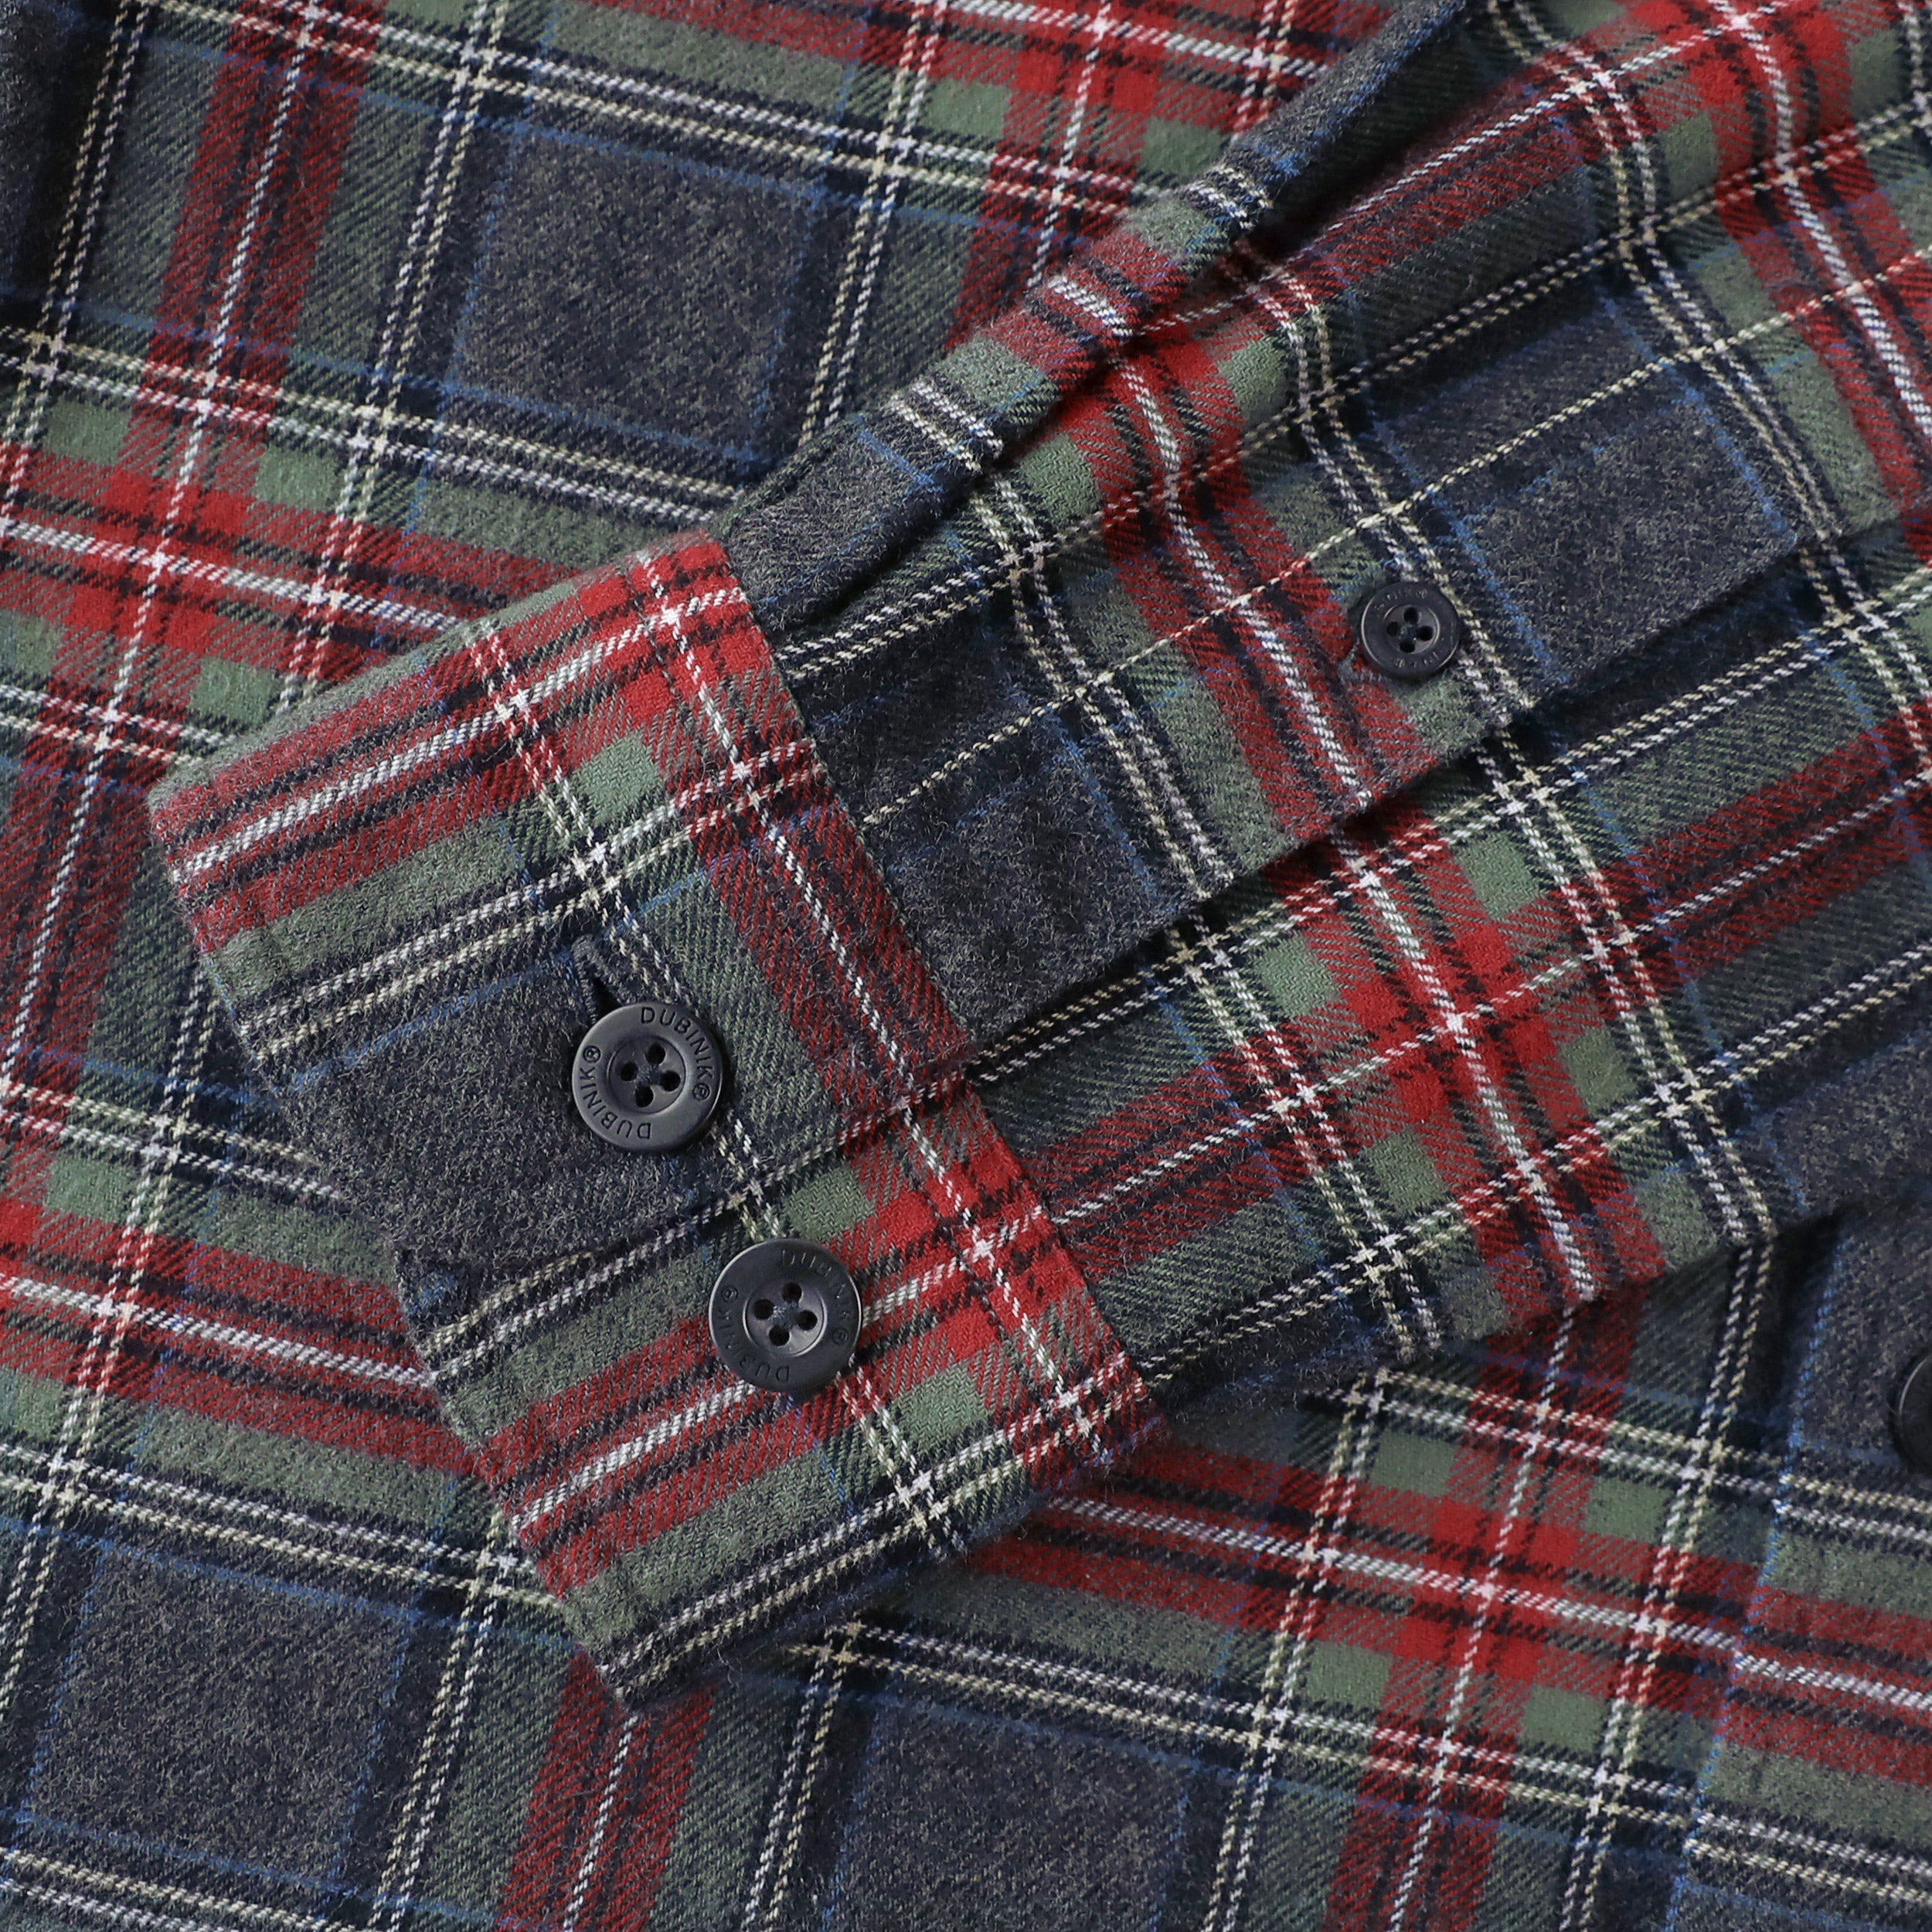 Dubinik®Mens Flannel Shirts Long Sleeve Flannel Shirt For Men Warm Casual Soft Cotton Button Down Plaid Mens Flannel Shirt #3409